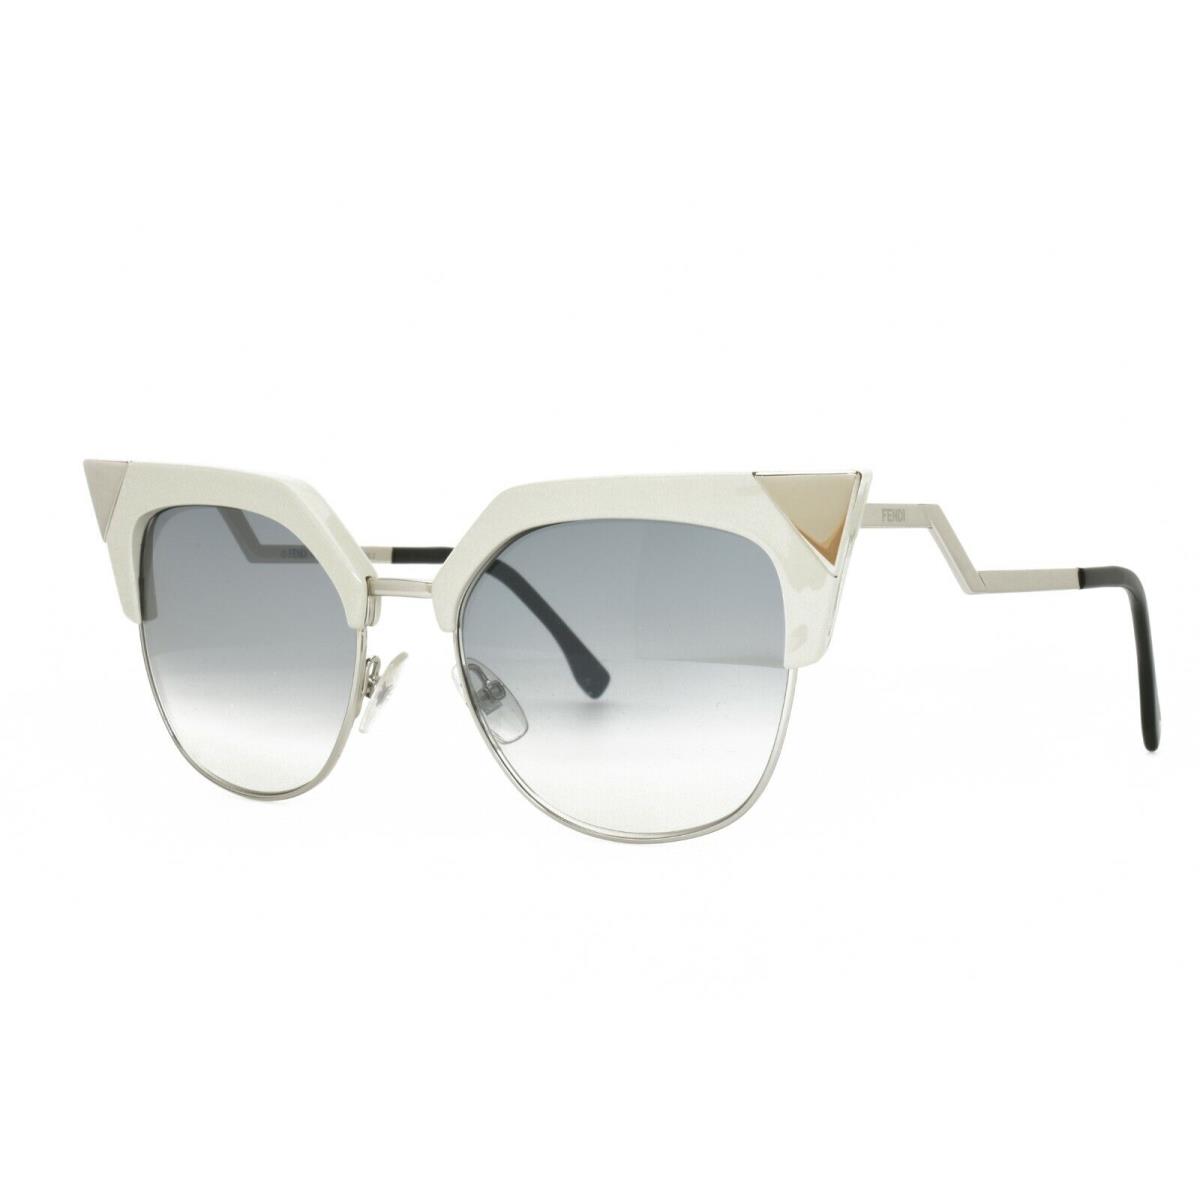 Fendi 0149/S Off White Palladium Sunglasses 54-18-140 - Frame: Beige, Lens: Gray